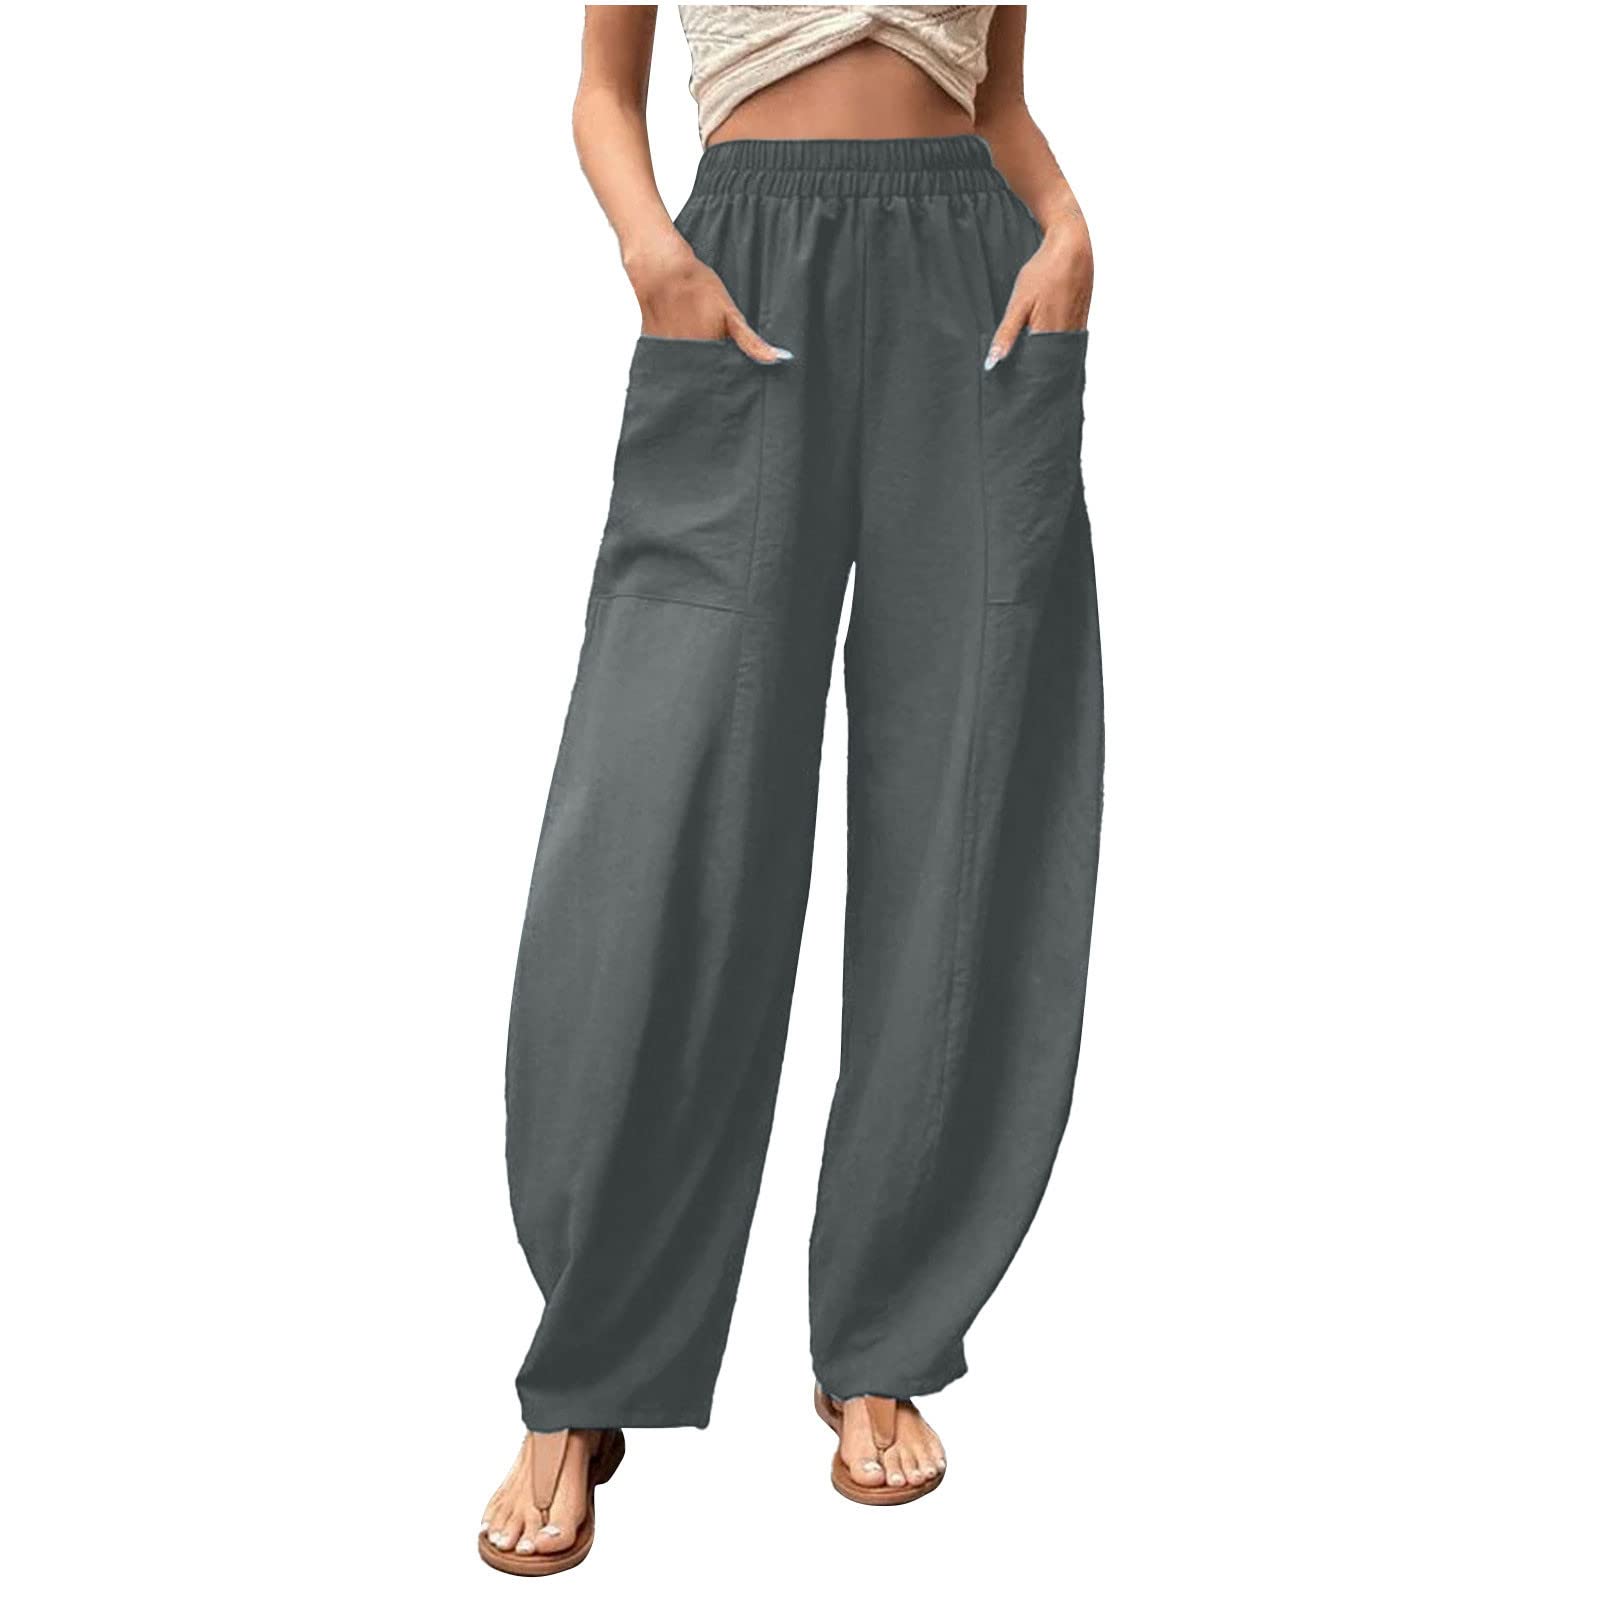 jsaierl Women Summer Pants Elastic Waist Wide Leg Loose Cotton Linen  Palazzo Pants Casual Comfy Long Pants Baggy Pocket Pants Gray Medium